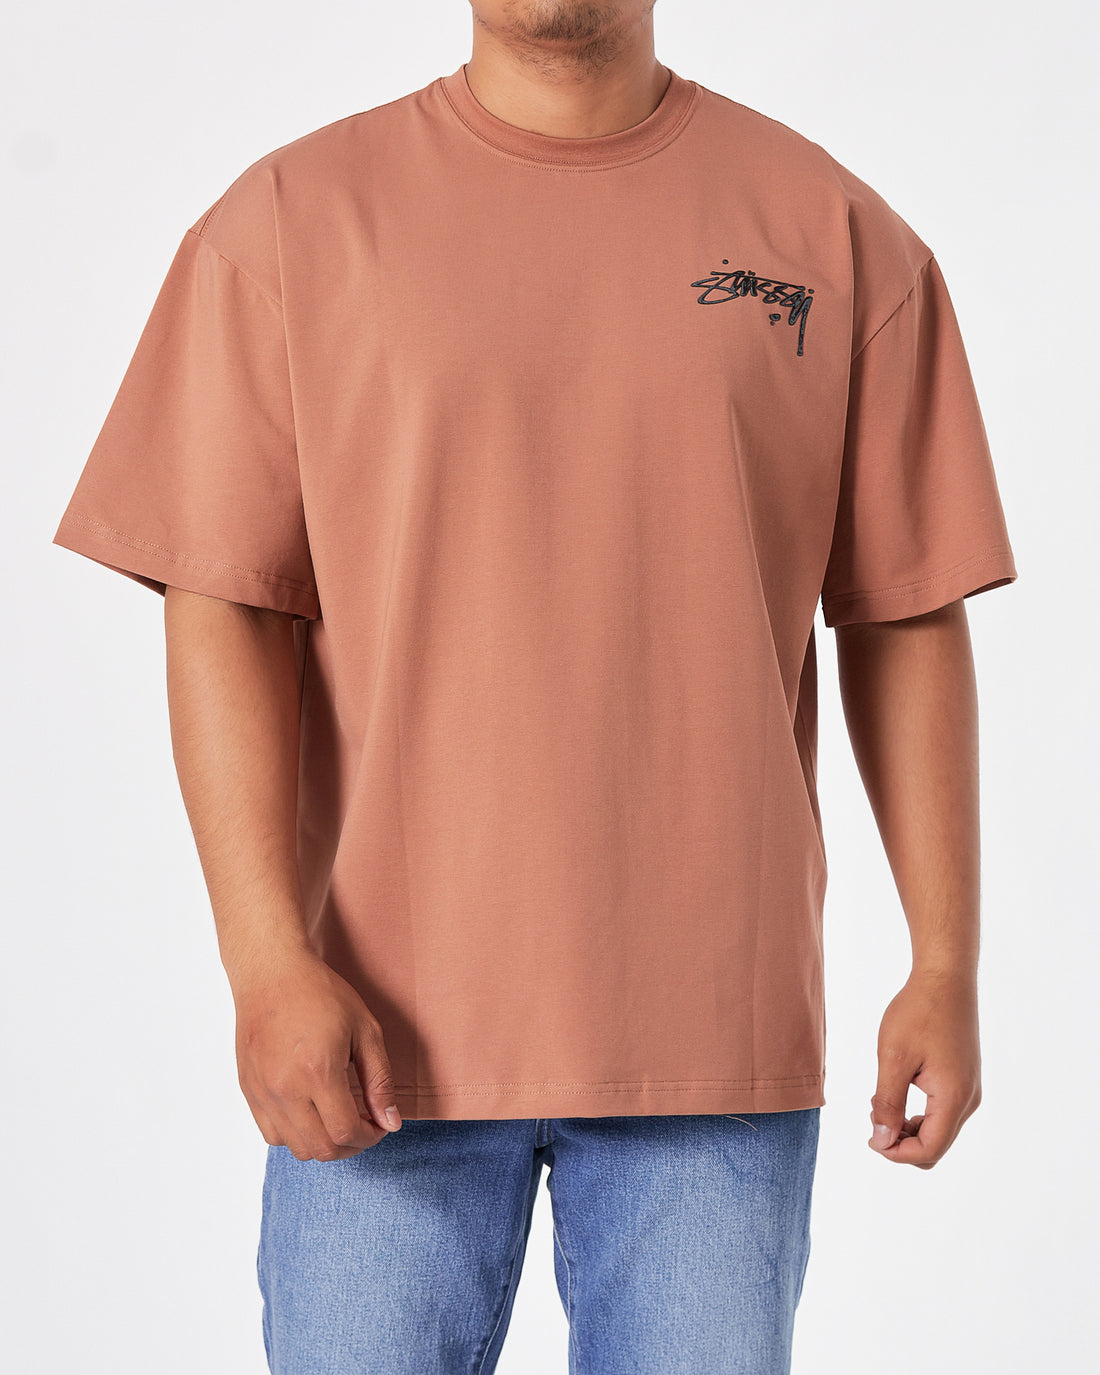 STU Front Back Logo Graffiti Printed Men Brown T-Shirt 20.90